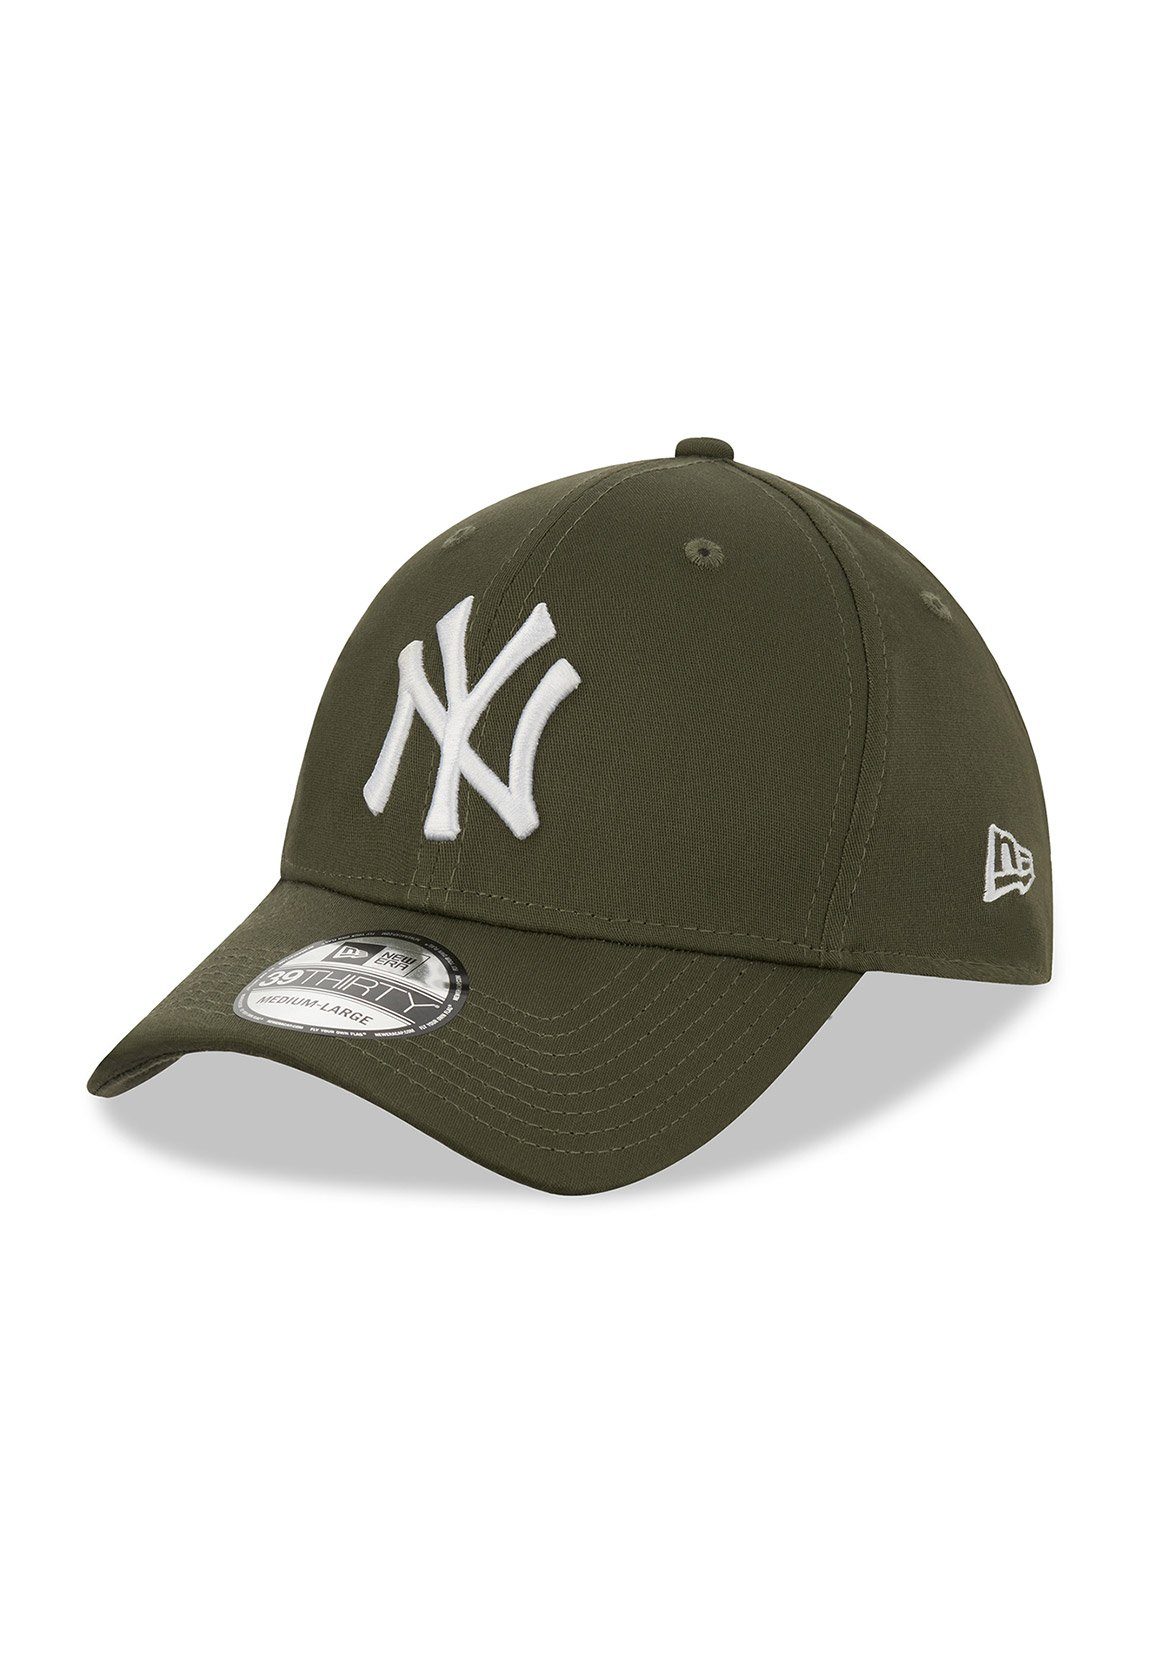 Khaki Era NY Baseball Cap 39Thirty League Era New Weiß YANKEES Cap Essential Oliv New